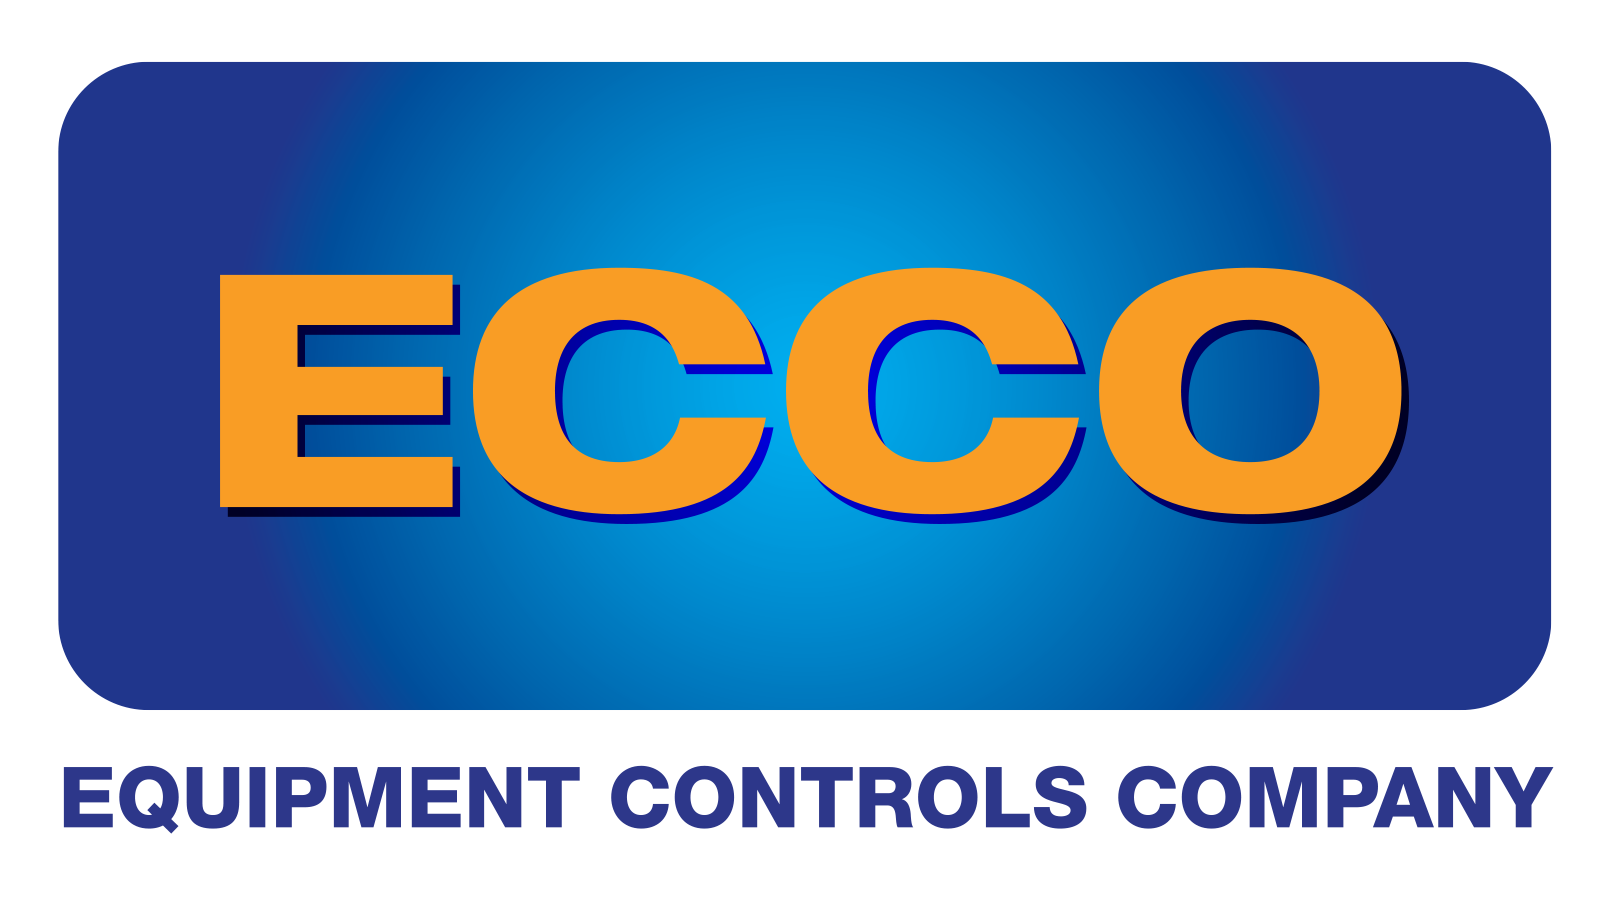 Equipment Controls Company: Distributor of Natural Gas Equipment